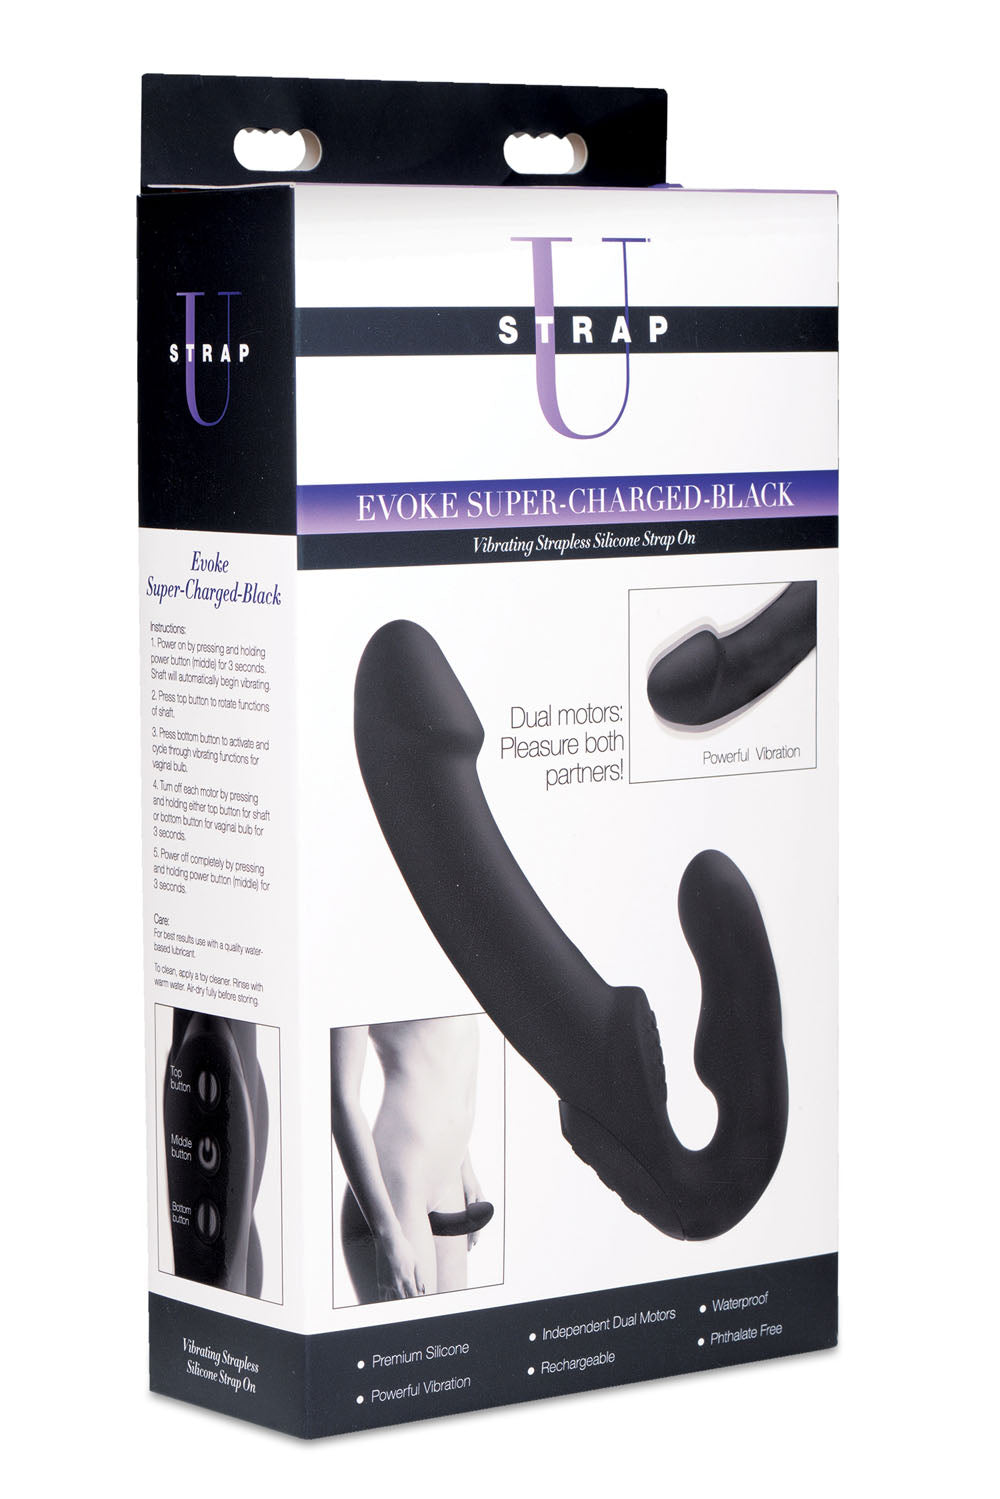 Evoke Rechargeable Vibrating Silicone Strapless Strap on - Black SU-AF624-BLK